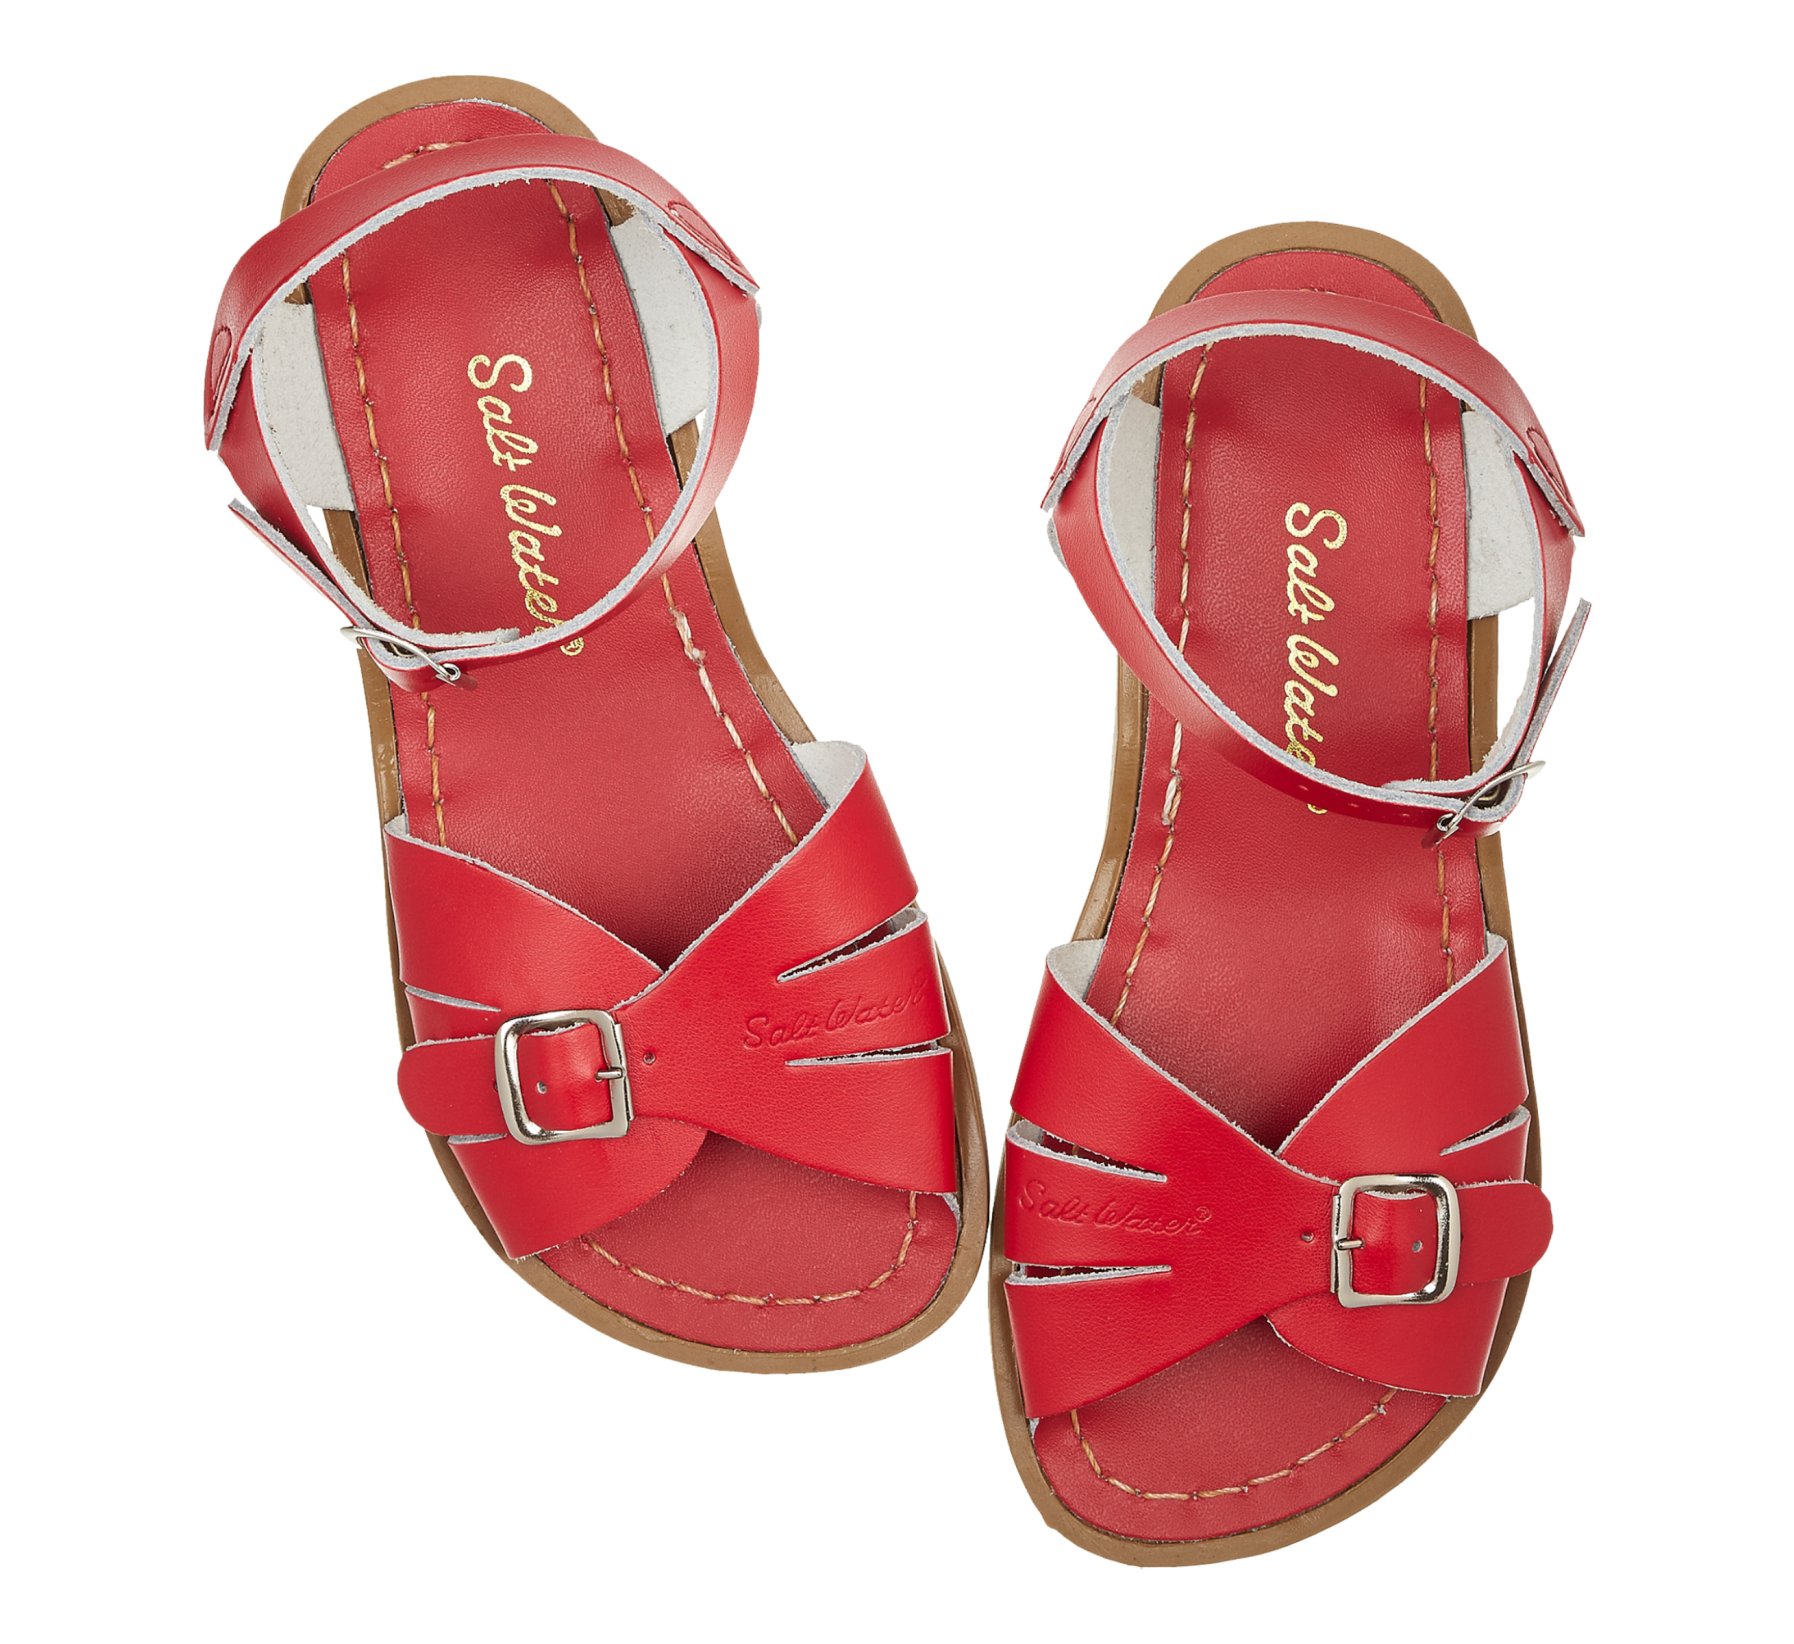 Classic Red Kids Sandals - Salt Water Sandals